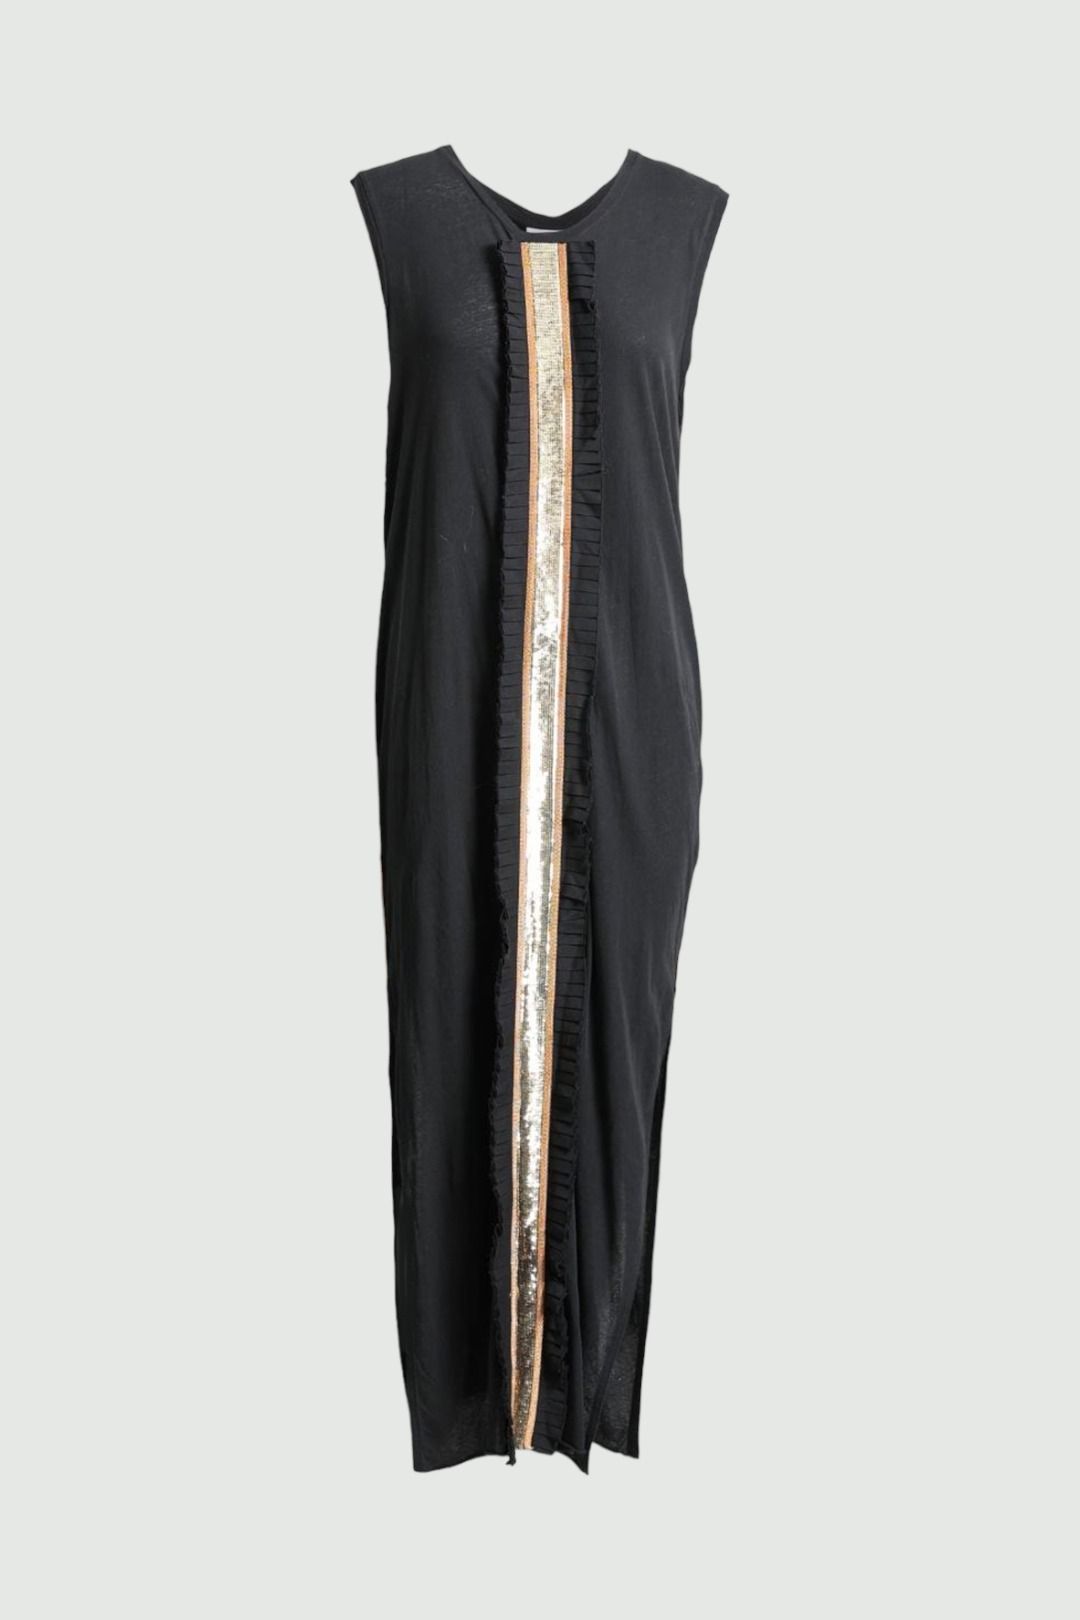 Sass and Bide Black Sleeveless Copper Embellished Dress